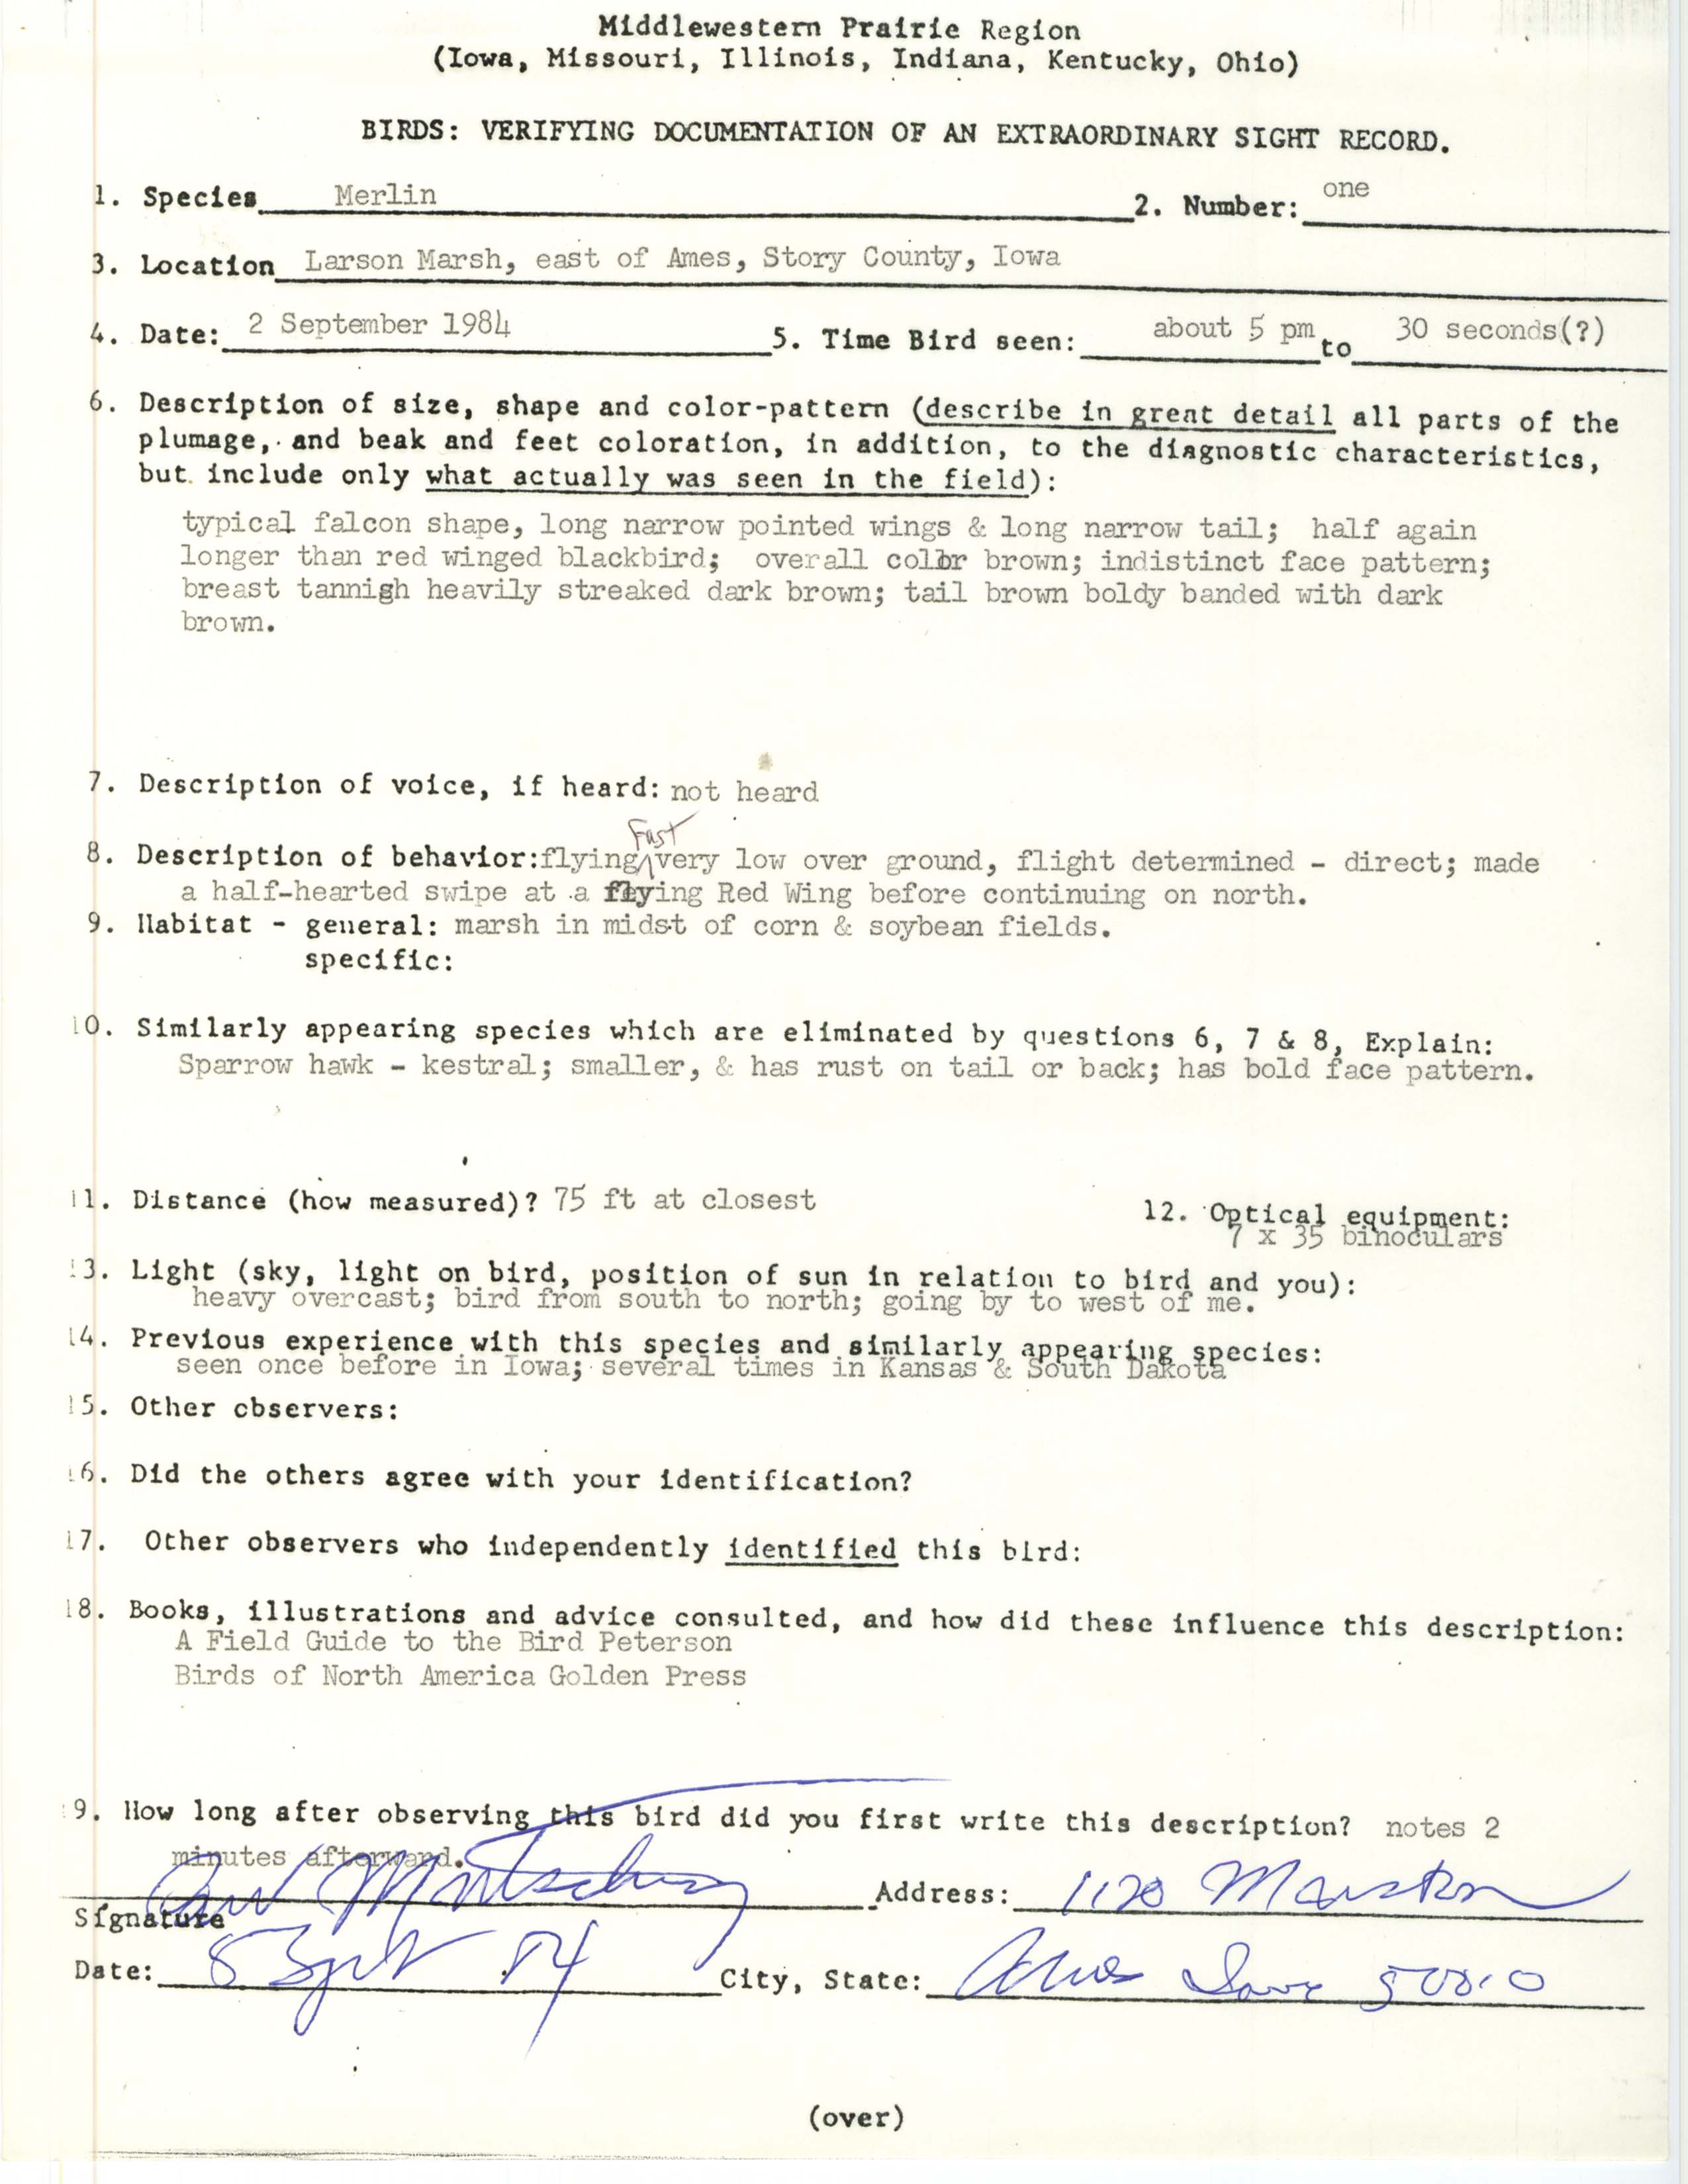 Rare bird documentation form for Merlin at Larson Marsh, 1984